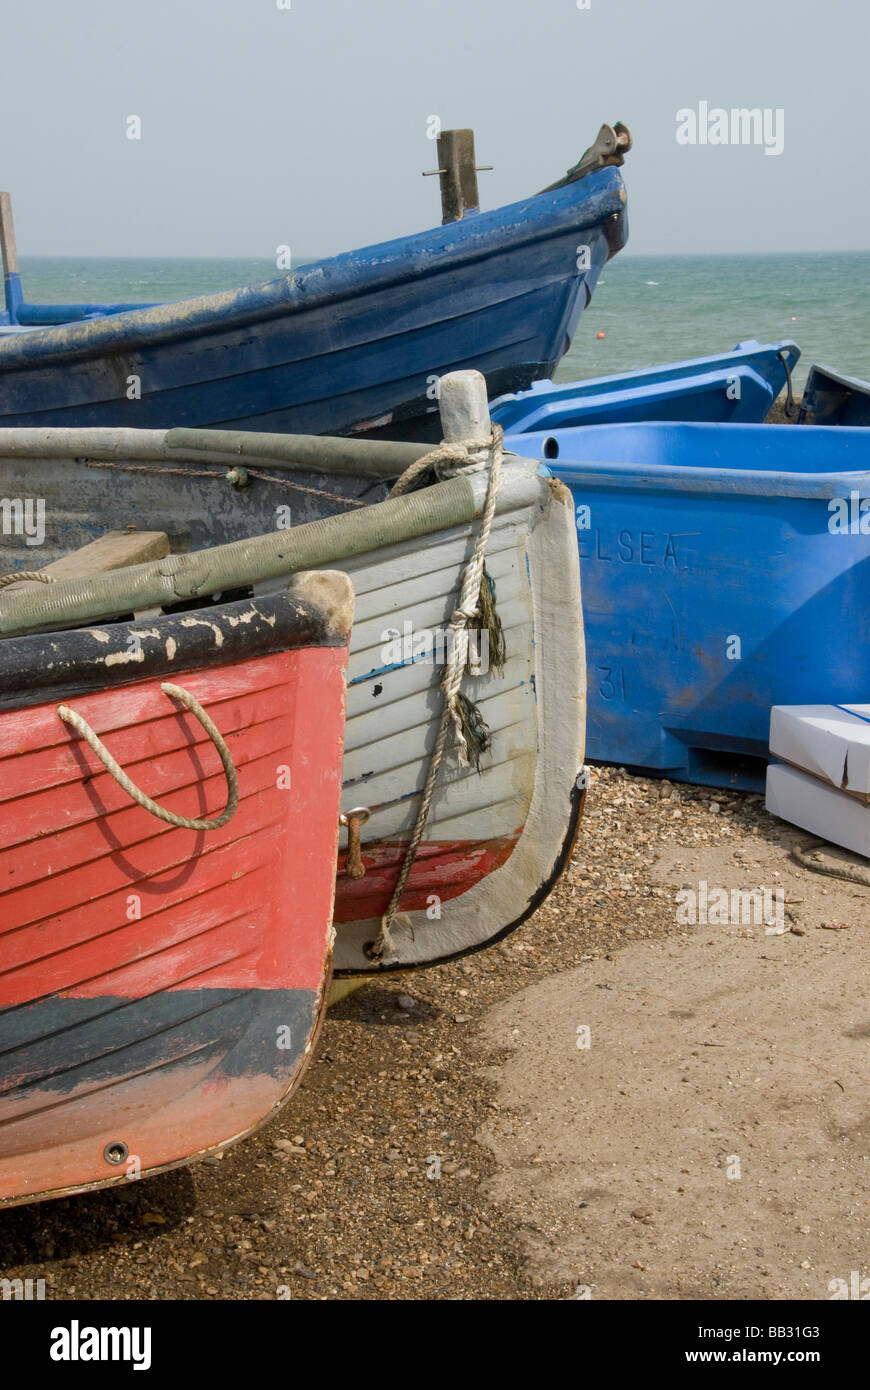 Angelboote/Fischerboote am Strand, Selsey Bill, West Sussex, England UK Stockfoto